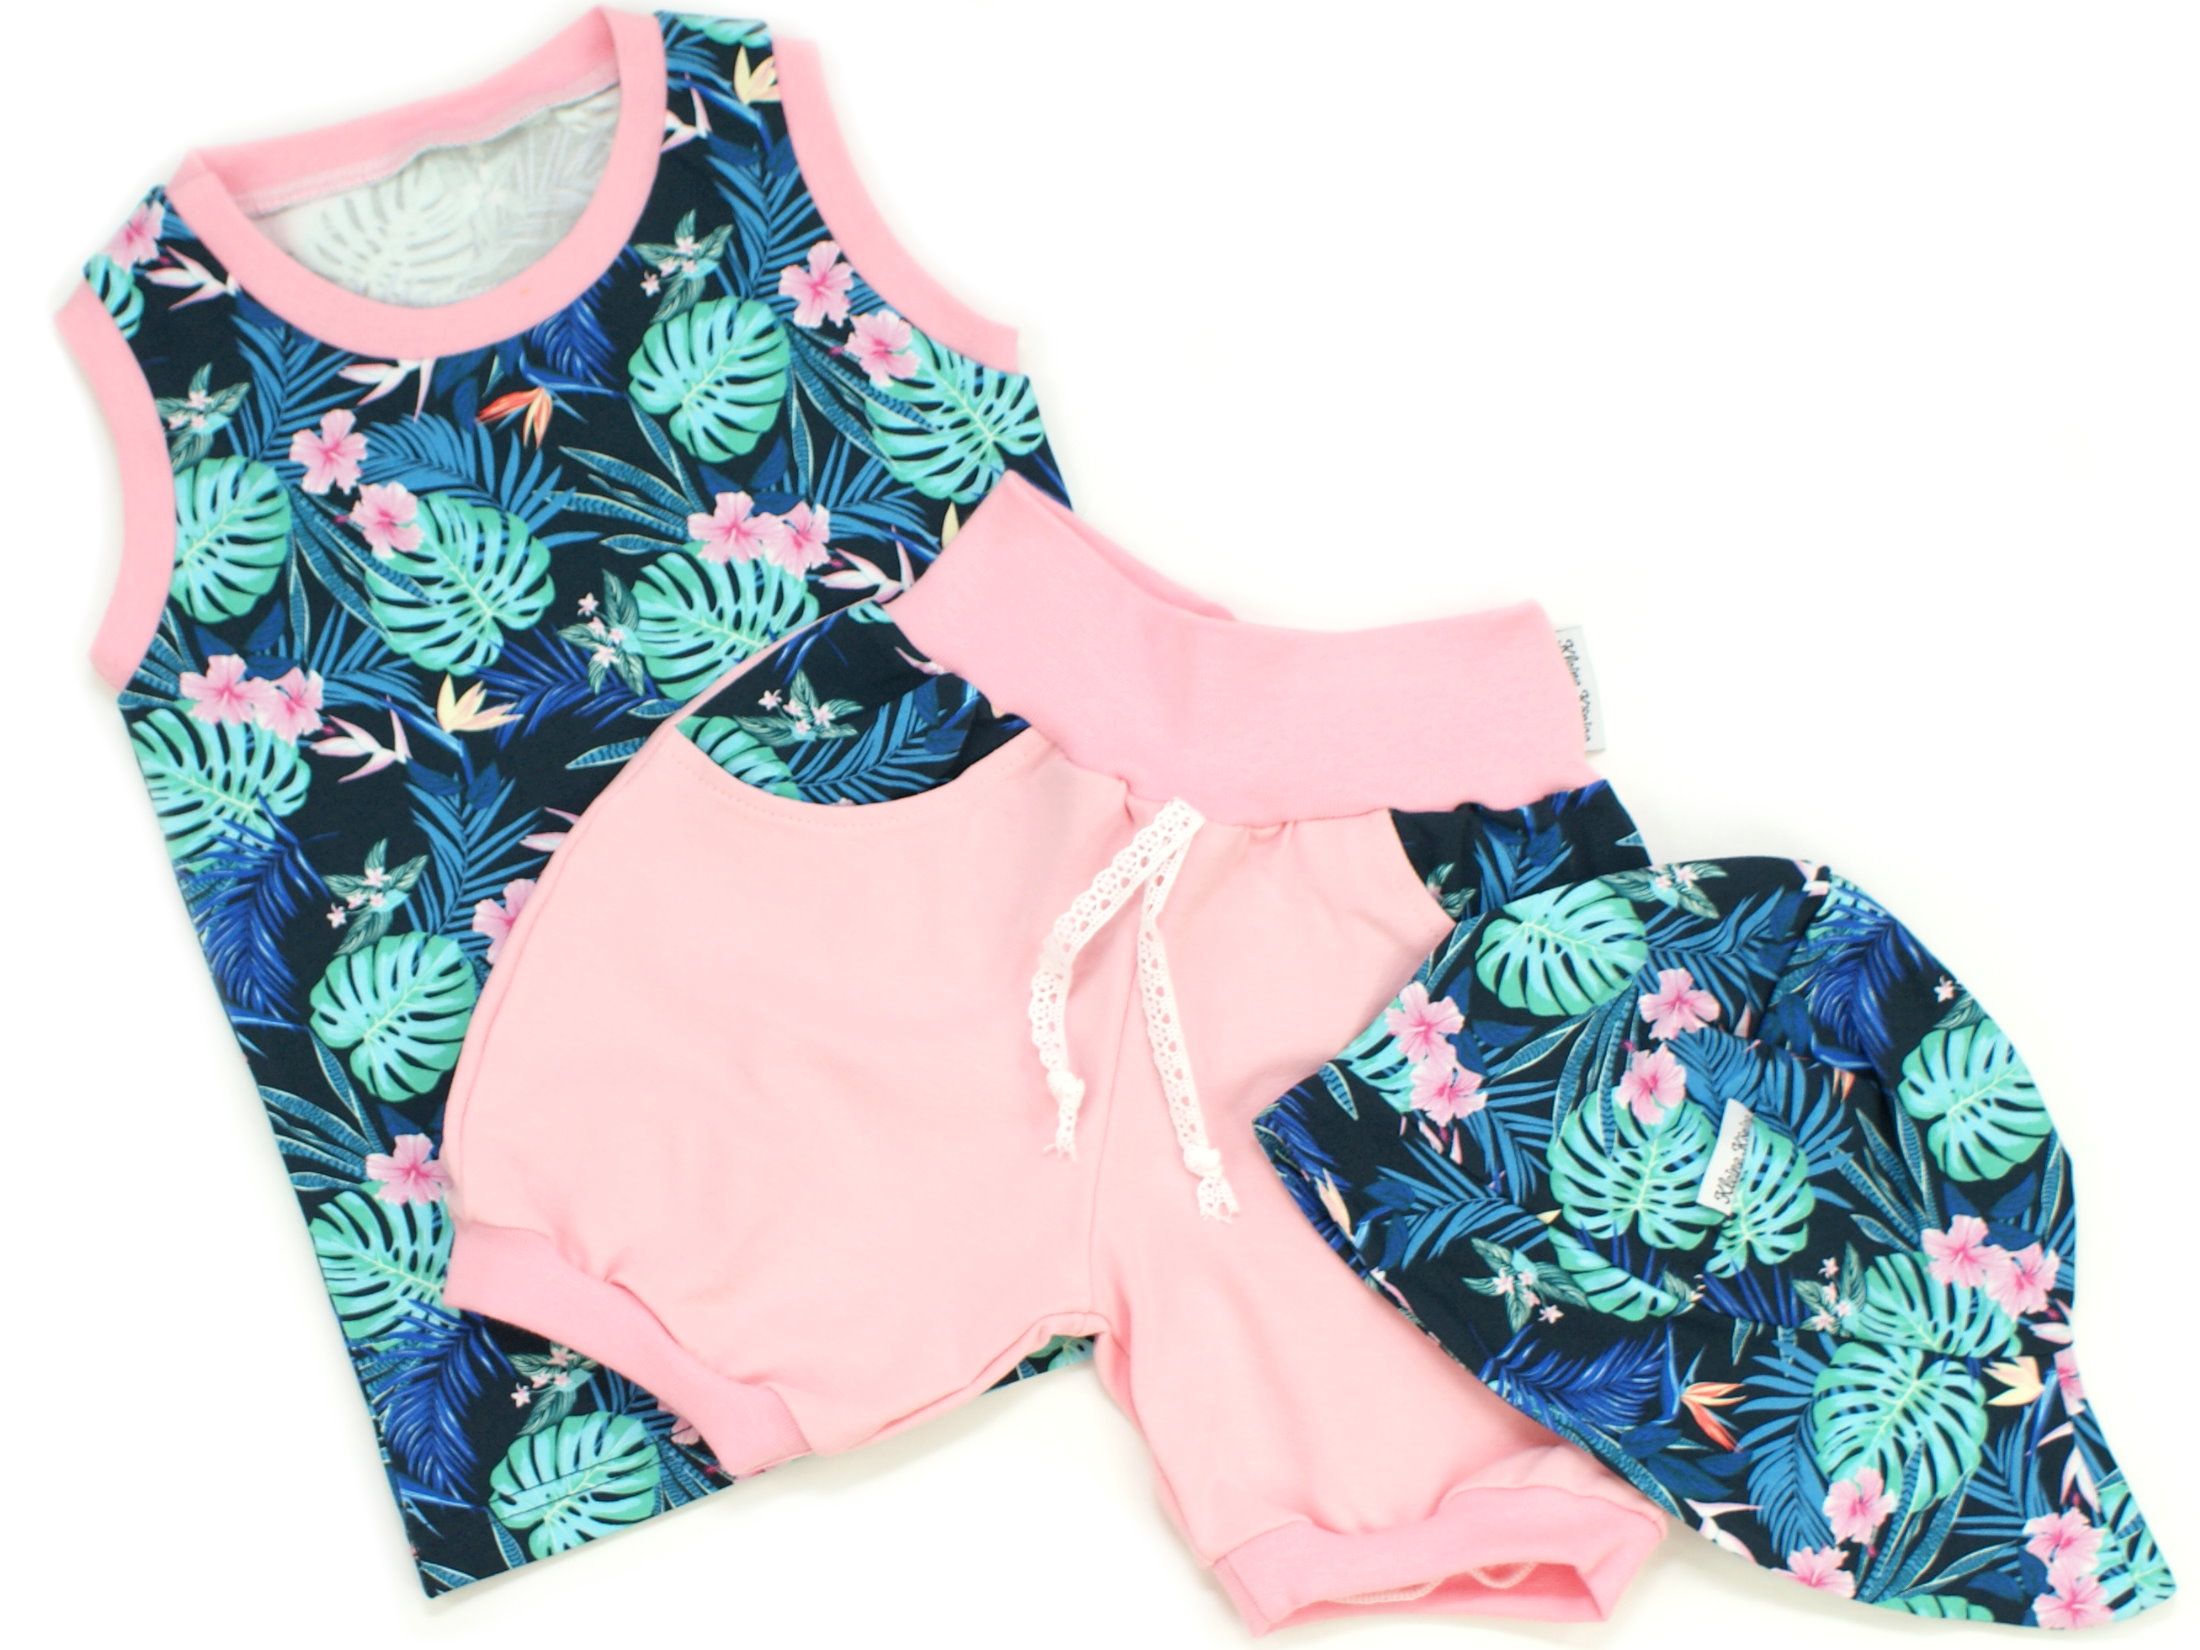 Kinder Sommer Shorts mit Taschen "Tropic" uni rosa